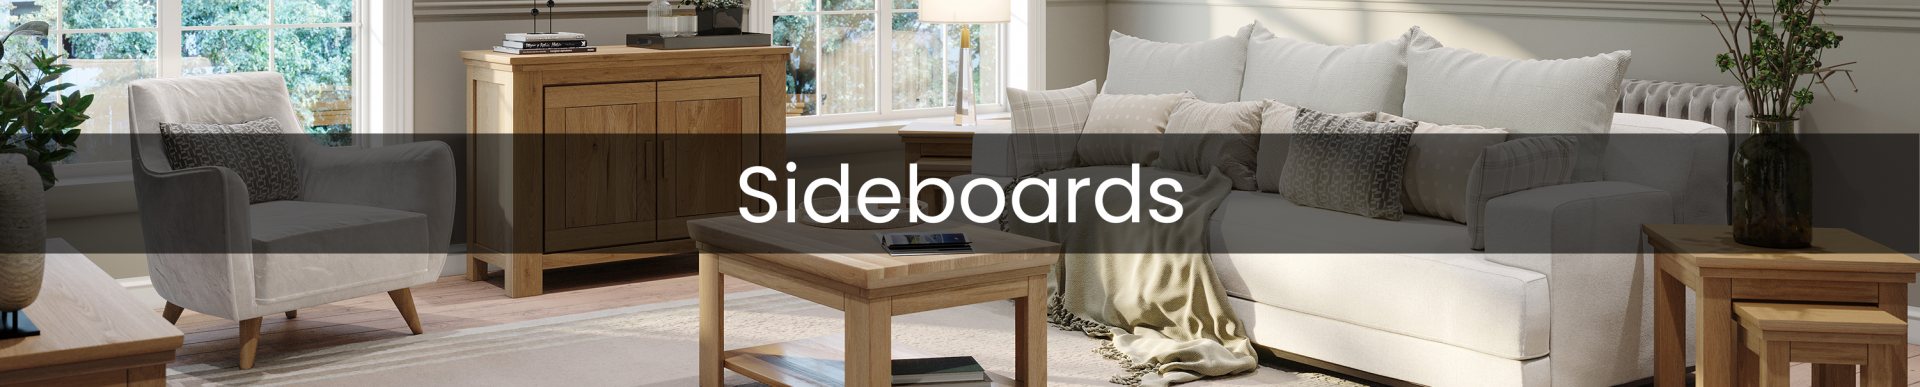 sideboards